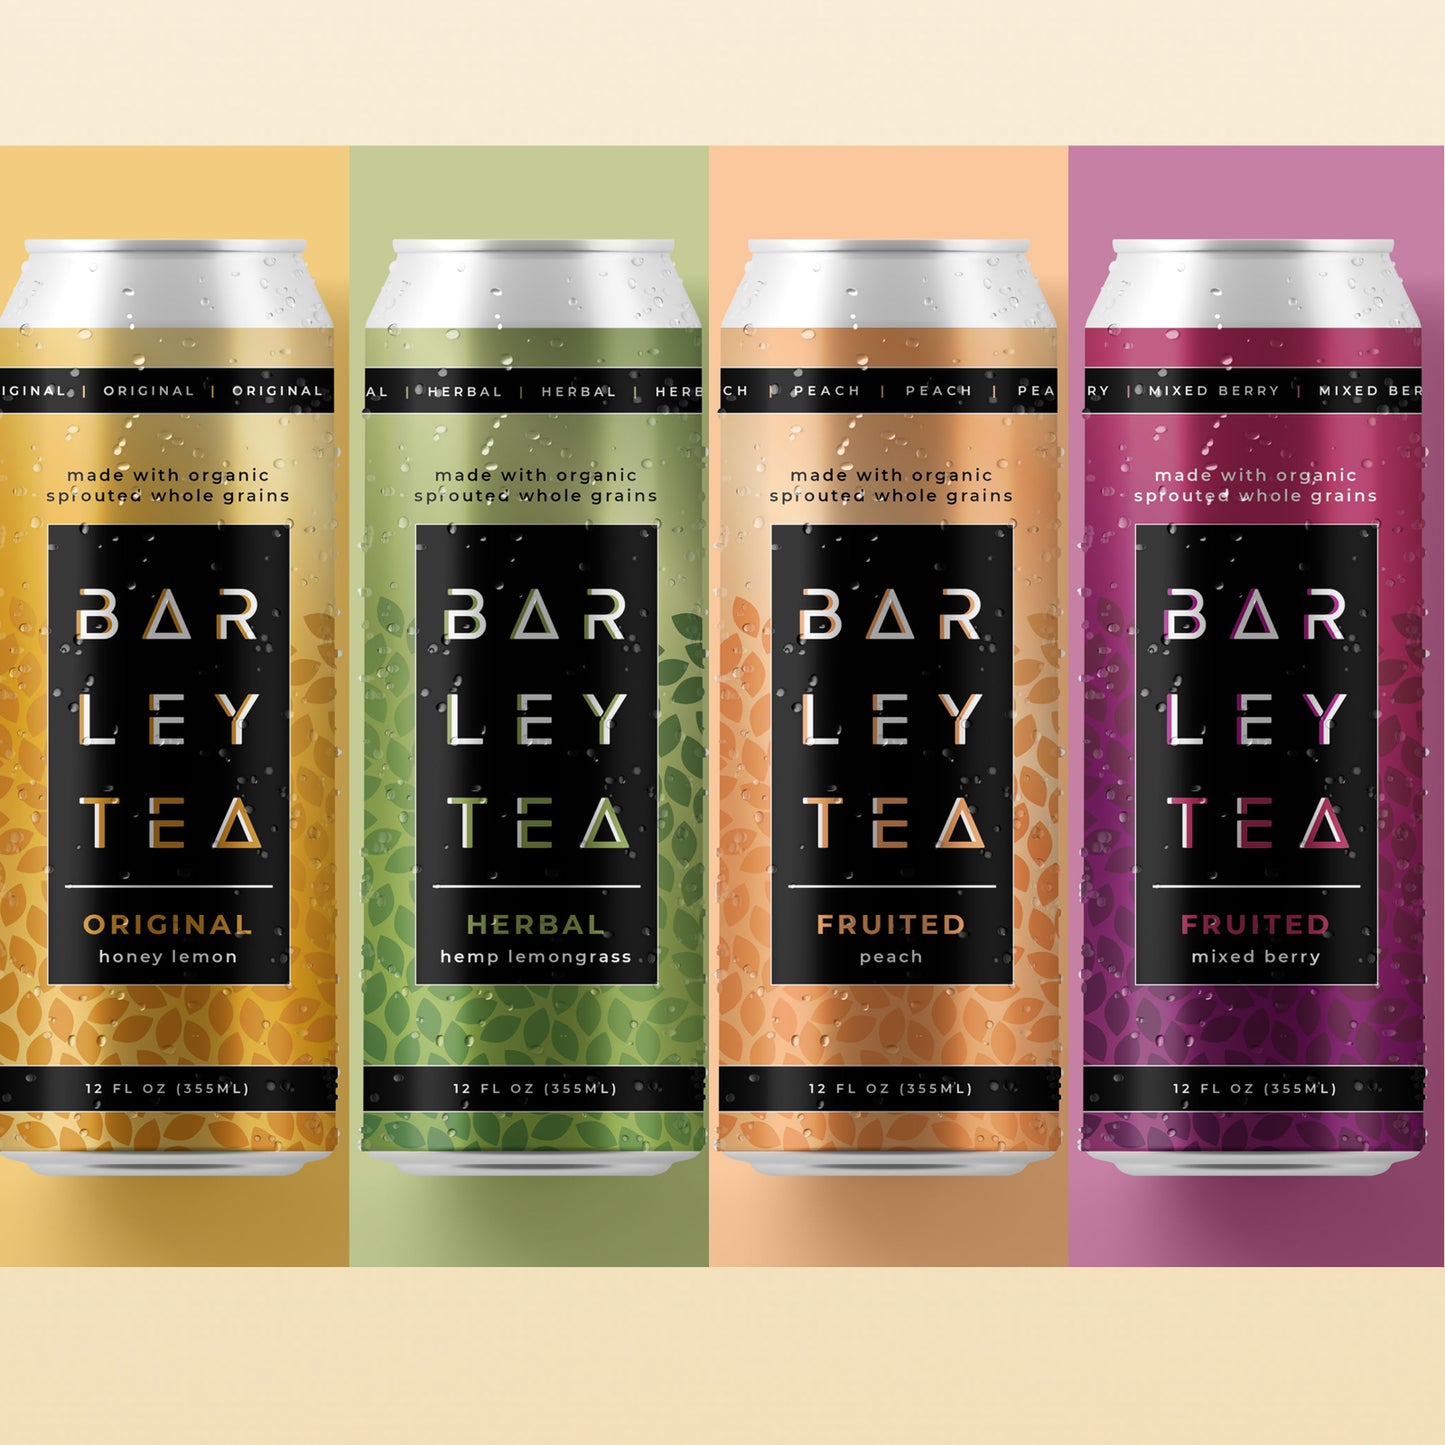 Label of each variety barley tea